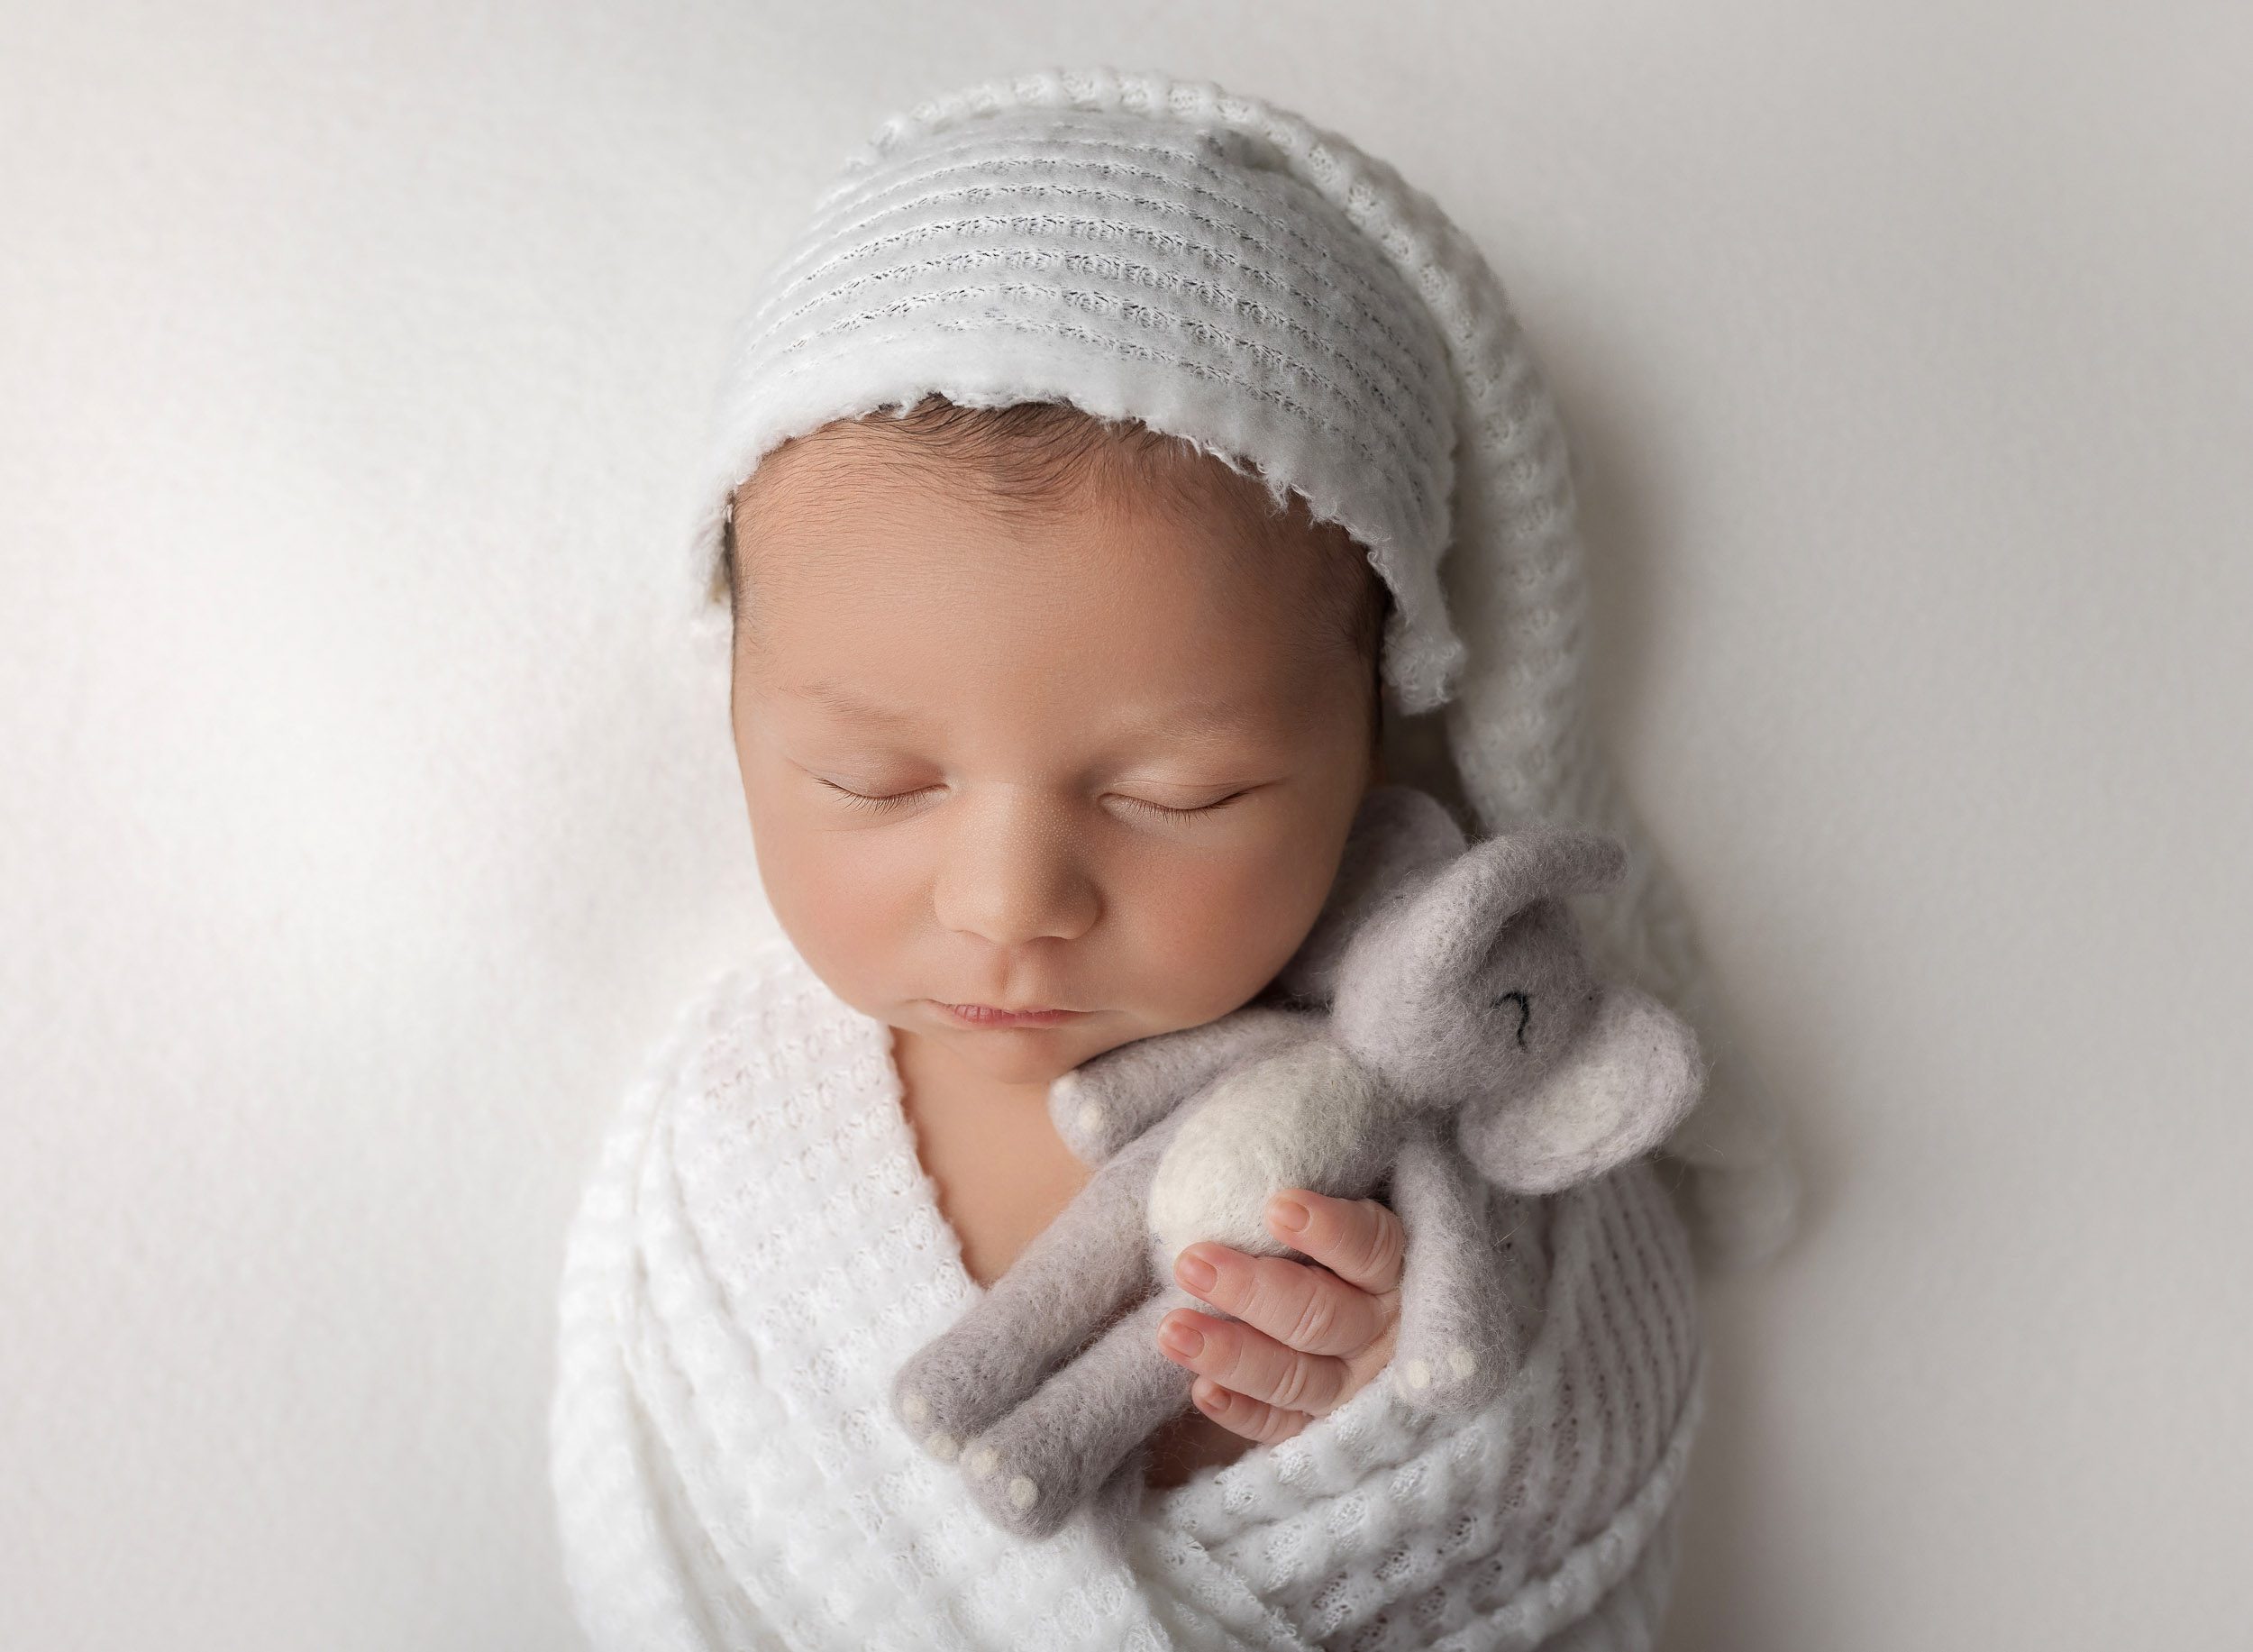 newborn boy wearing white hat snuggling elephant